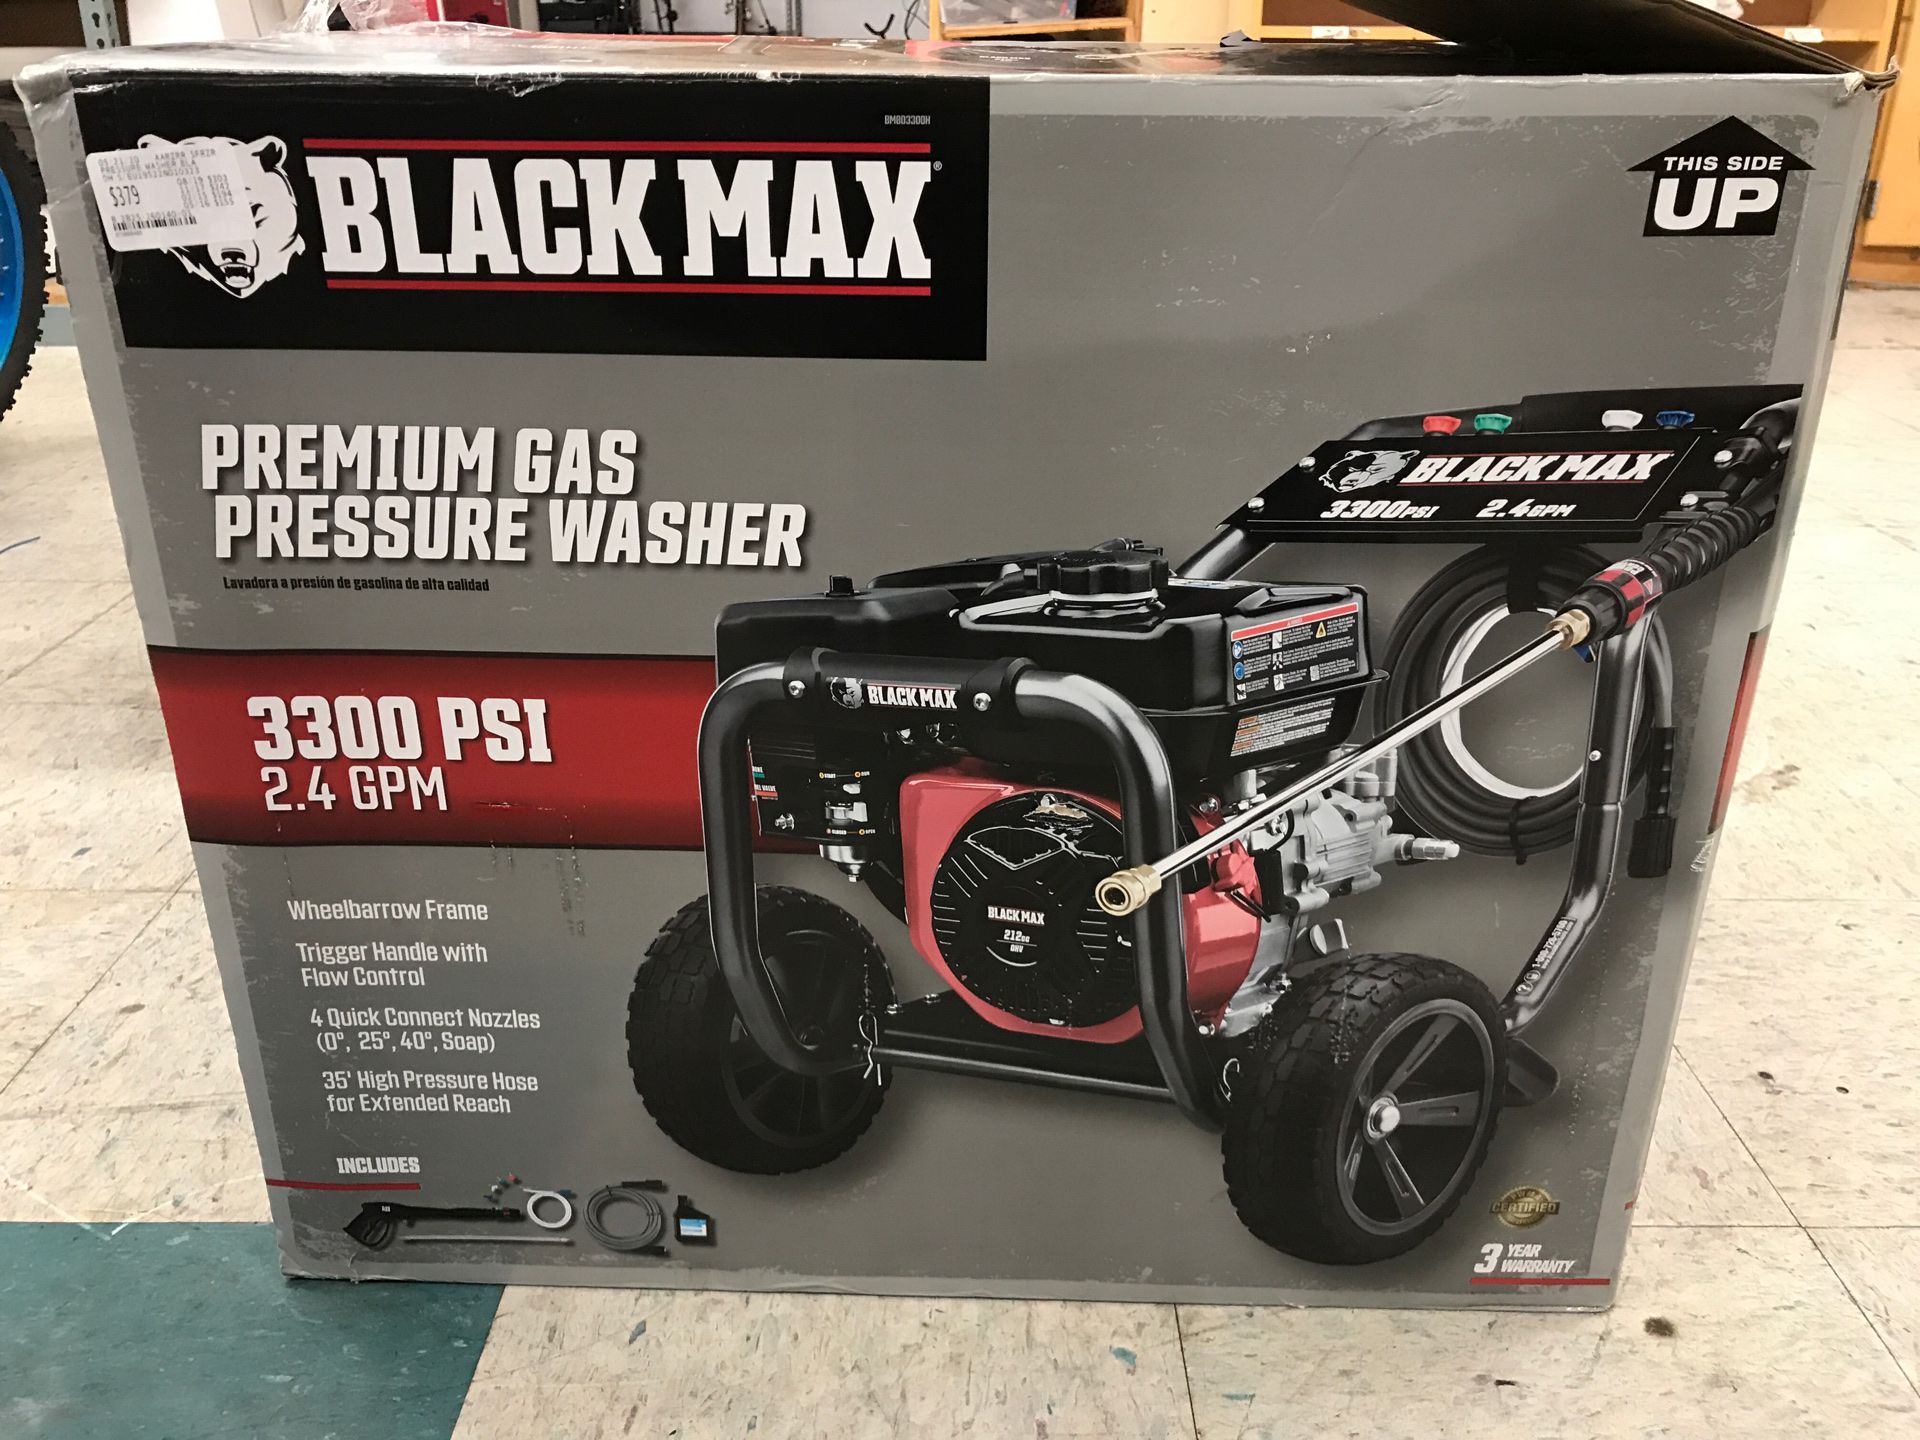 Black Max pressure washer